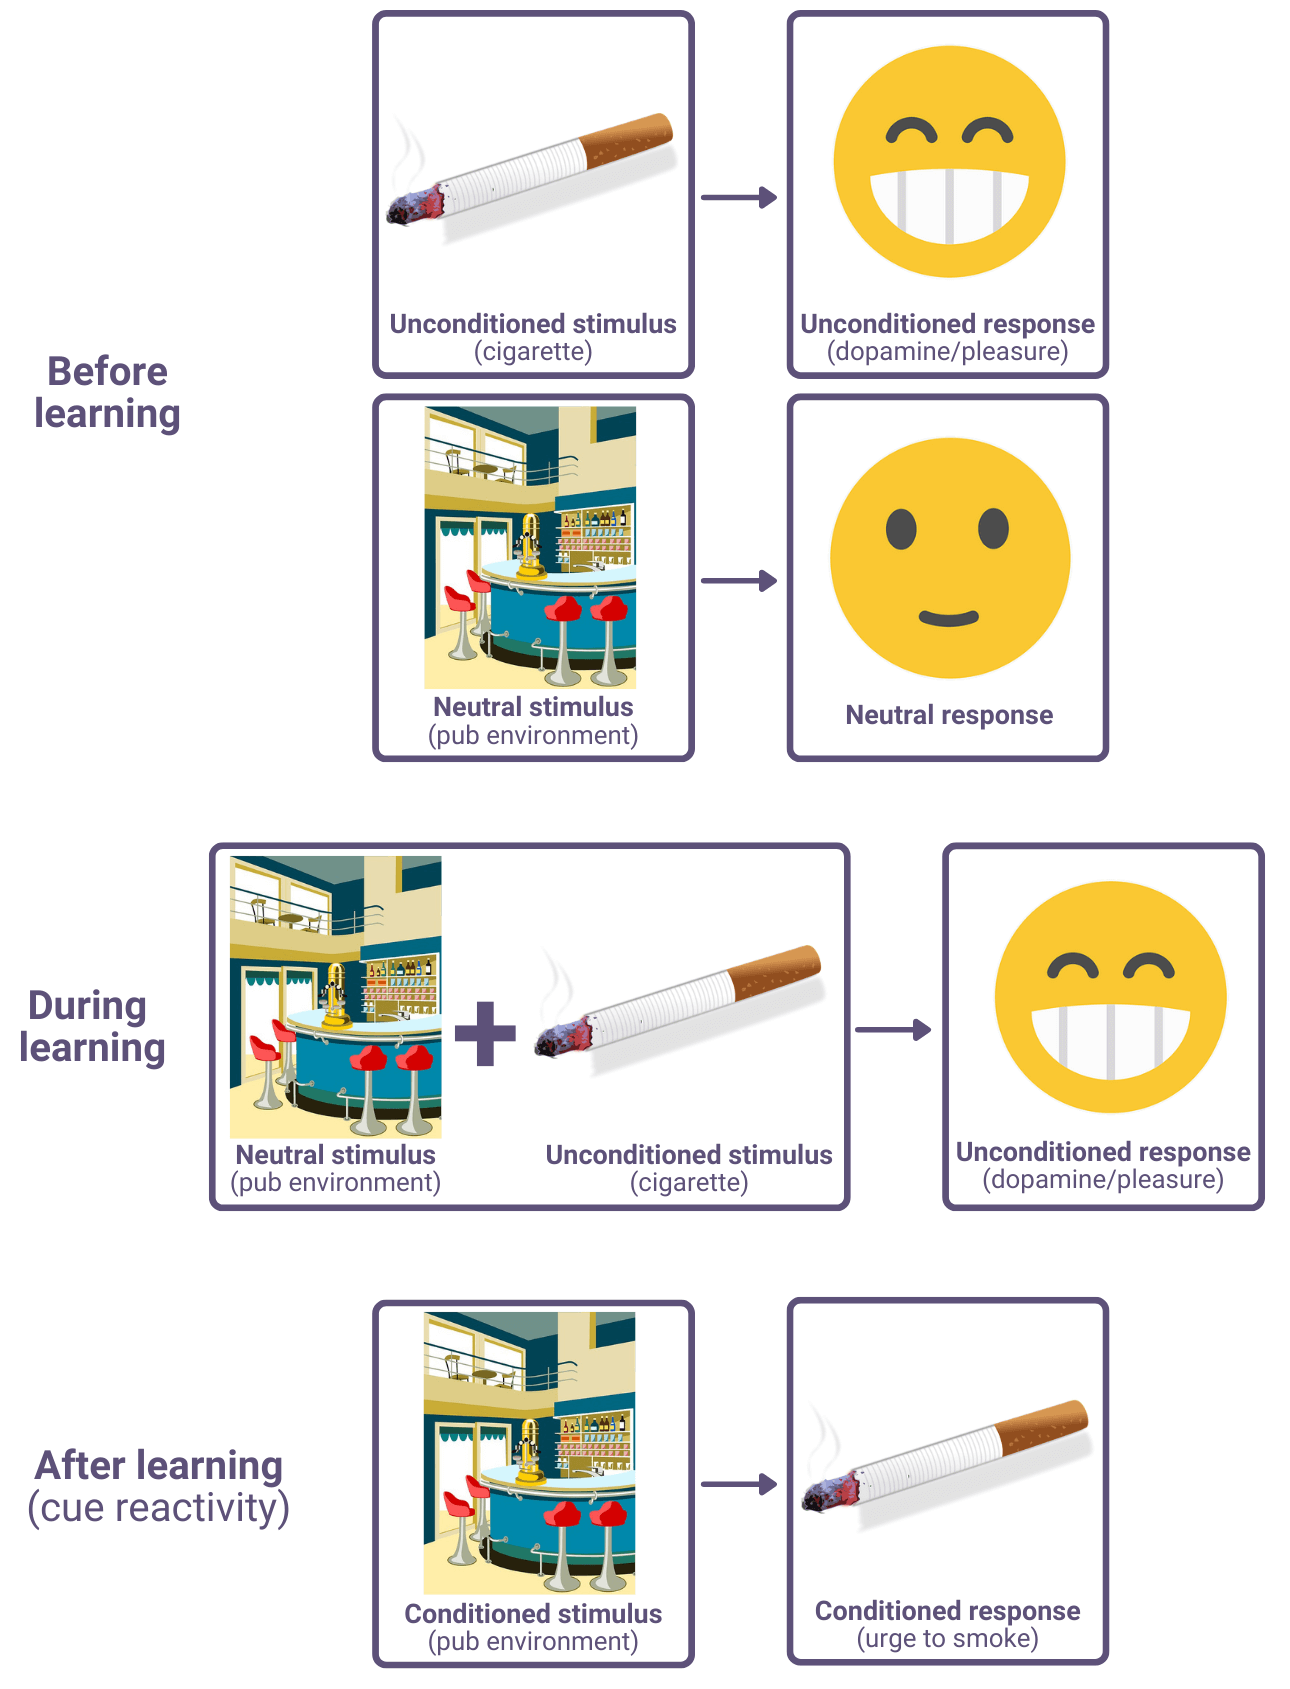 cue reactivity nicotine addiction